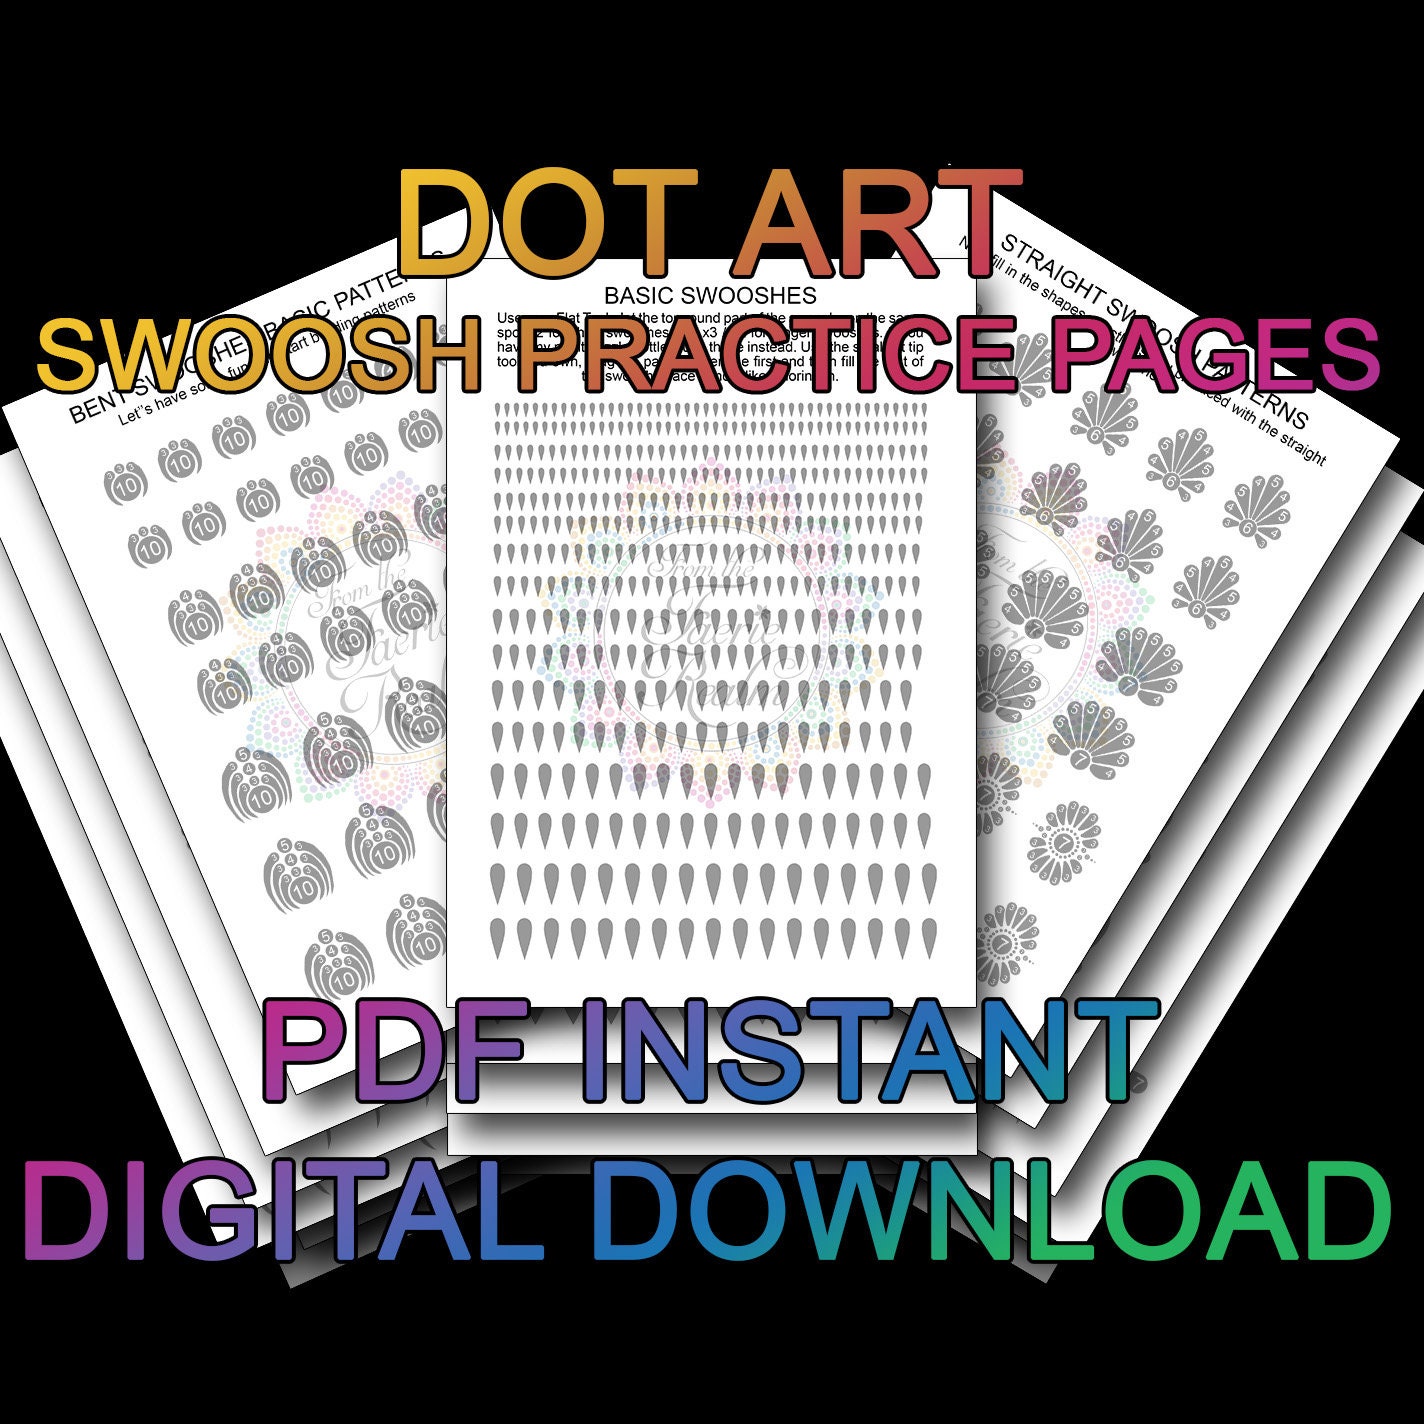 Swooshes Practice Sheets Digital Download PDF (Download Now) 